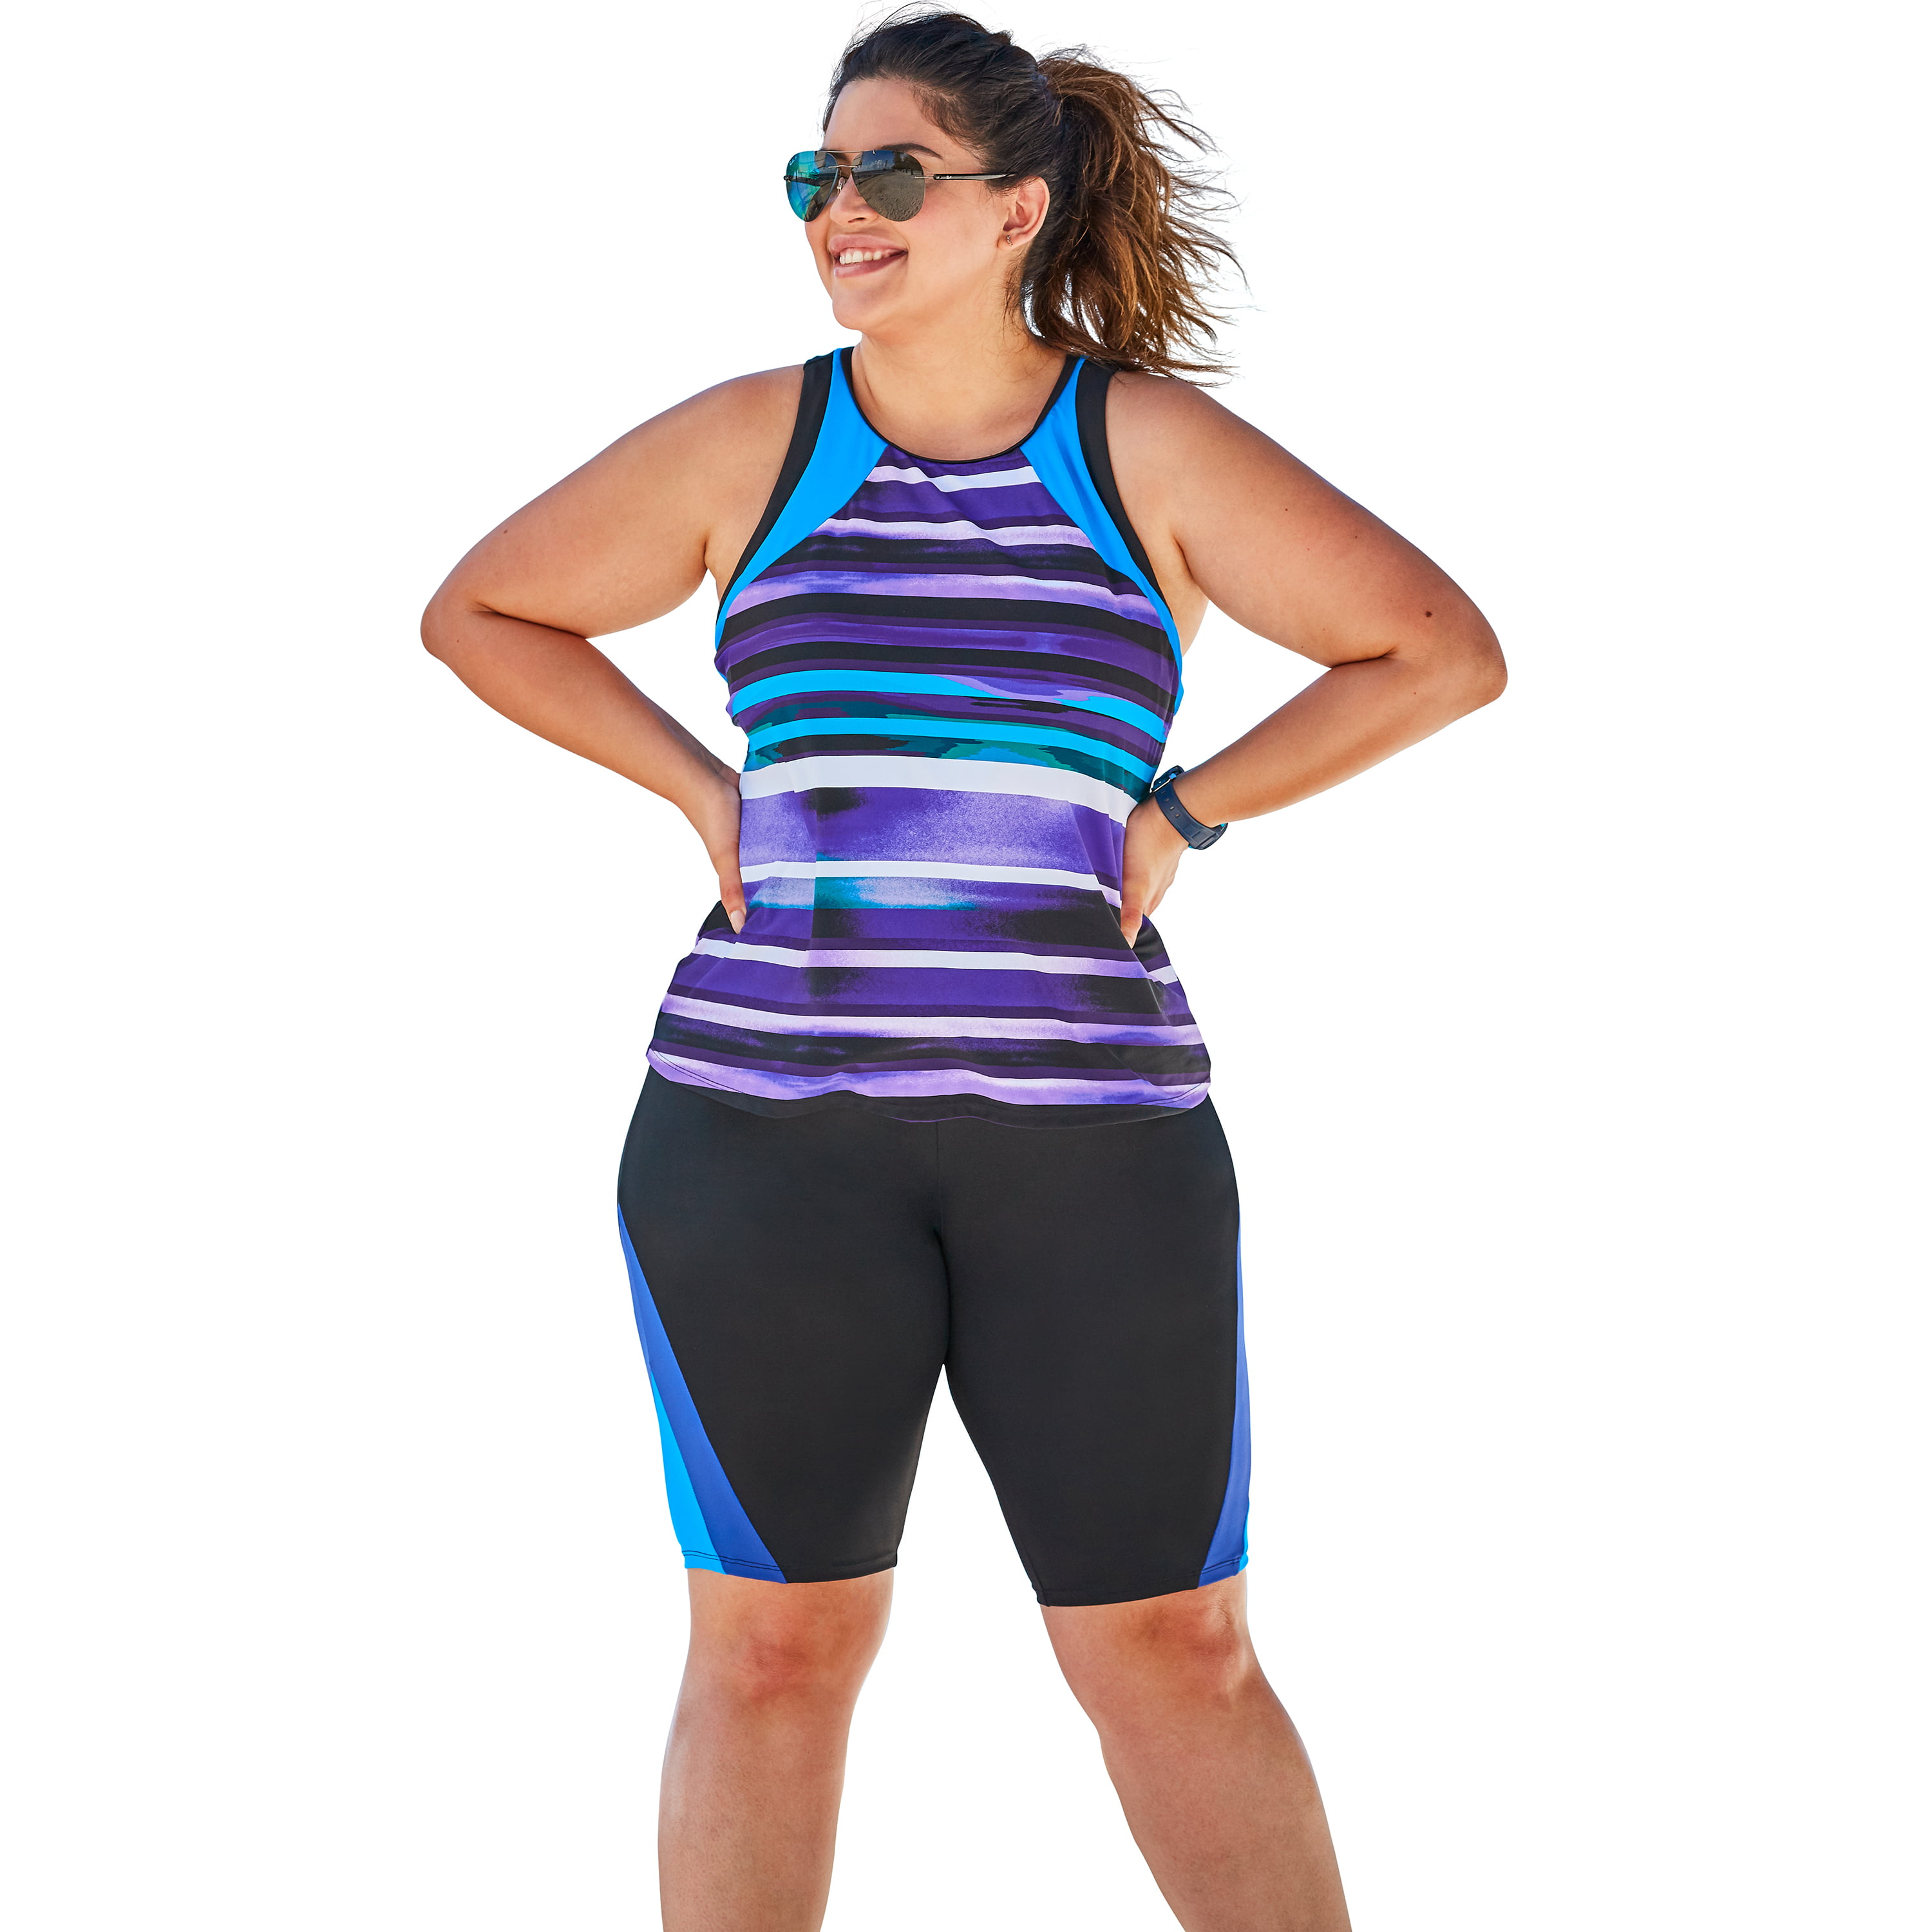 Swim 365 - Swim 365 Women's Plus Size Colorblock Tankini Top with Sun ...